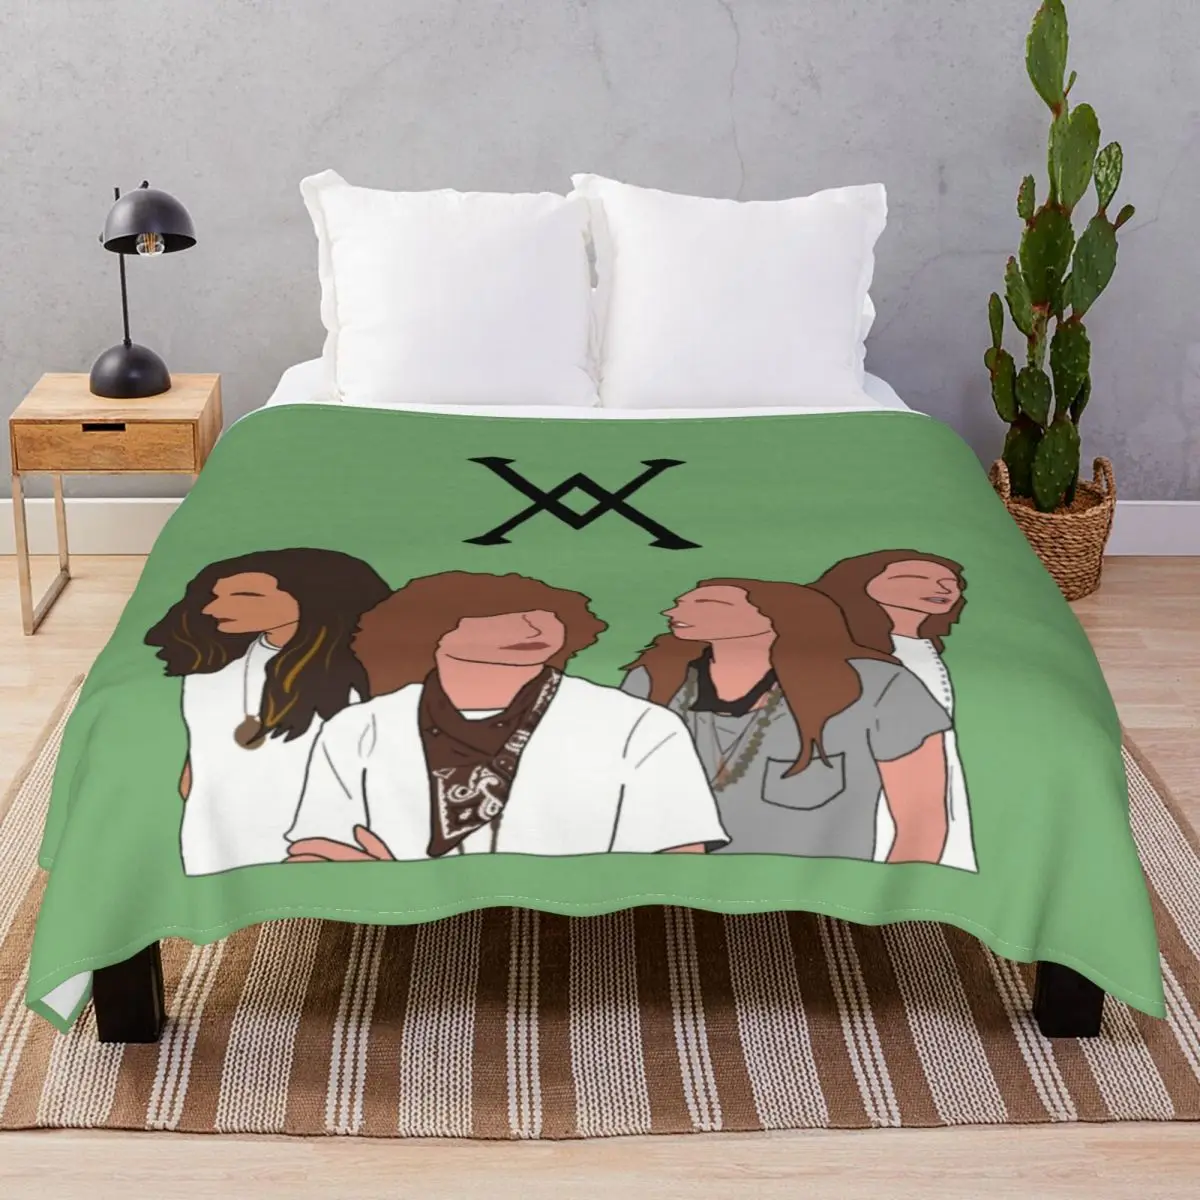 Greta Van Fleet Blankets Flannel Textile Decor Lightweight Thin Throw Blanket for Bedding Home Couch Camp Office